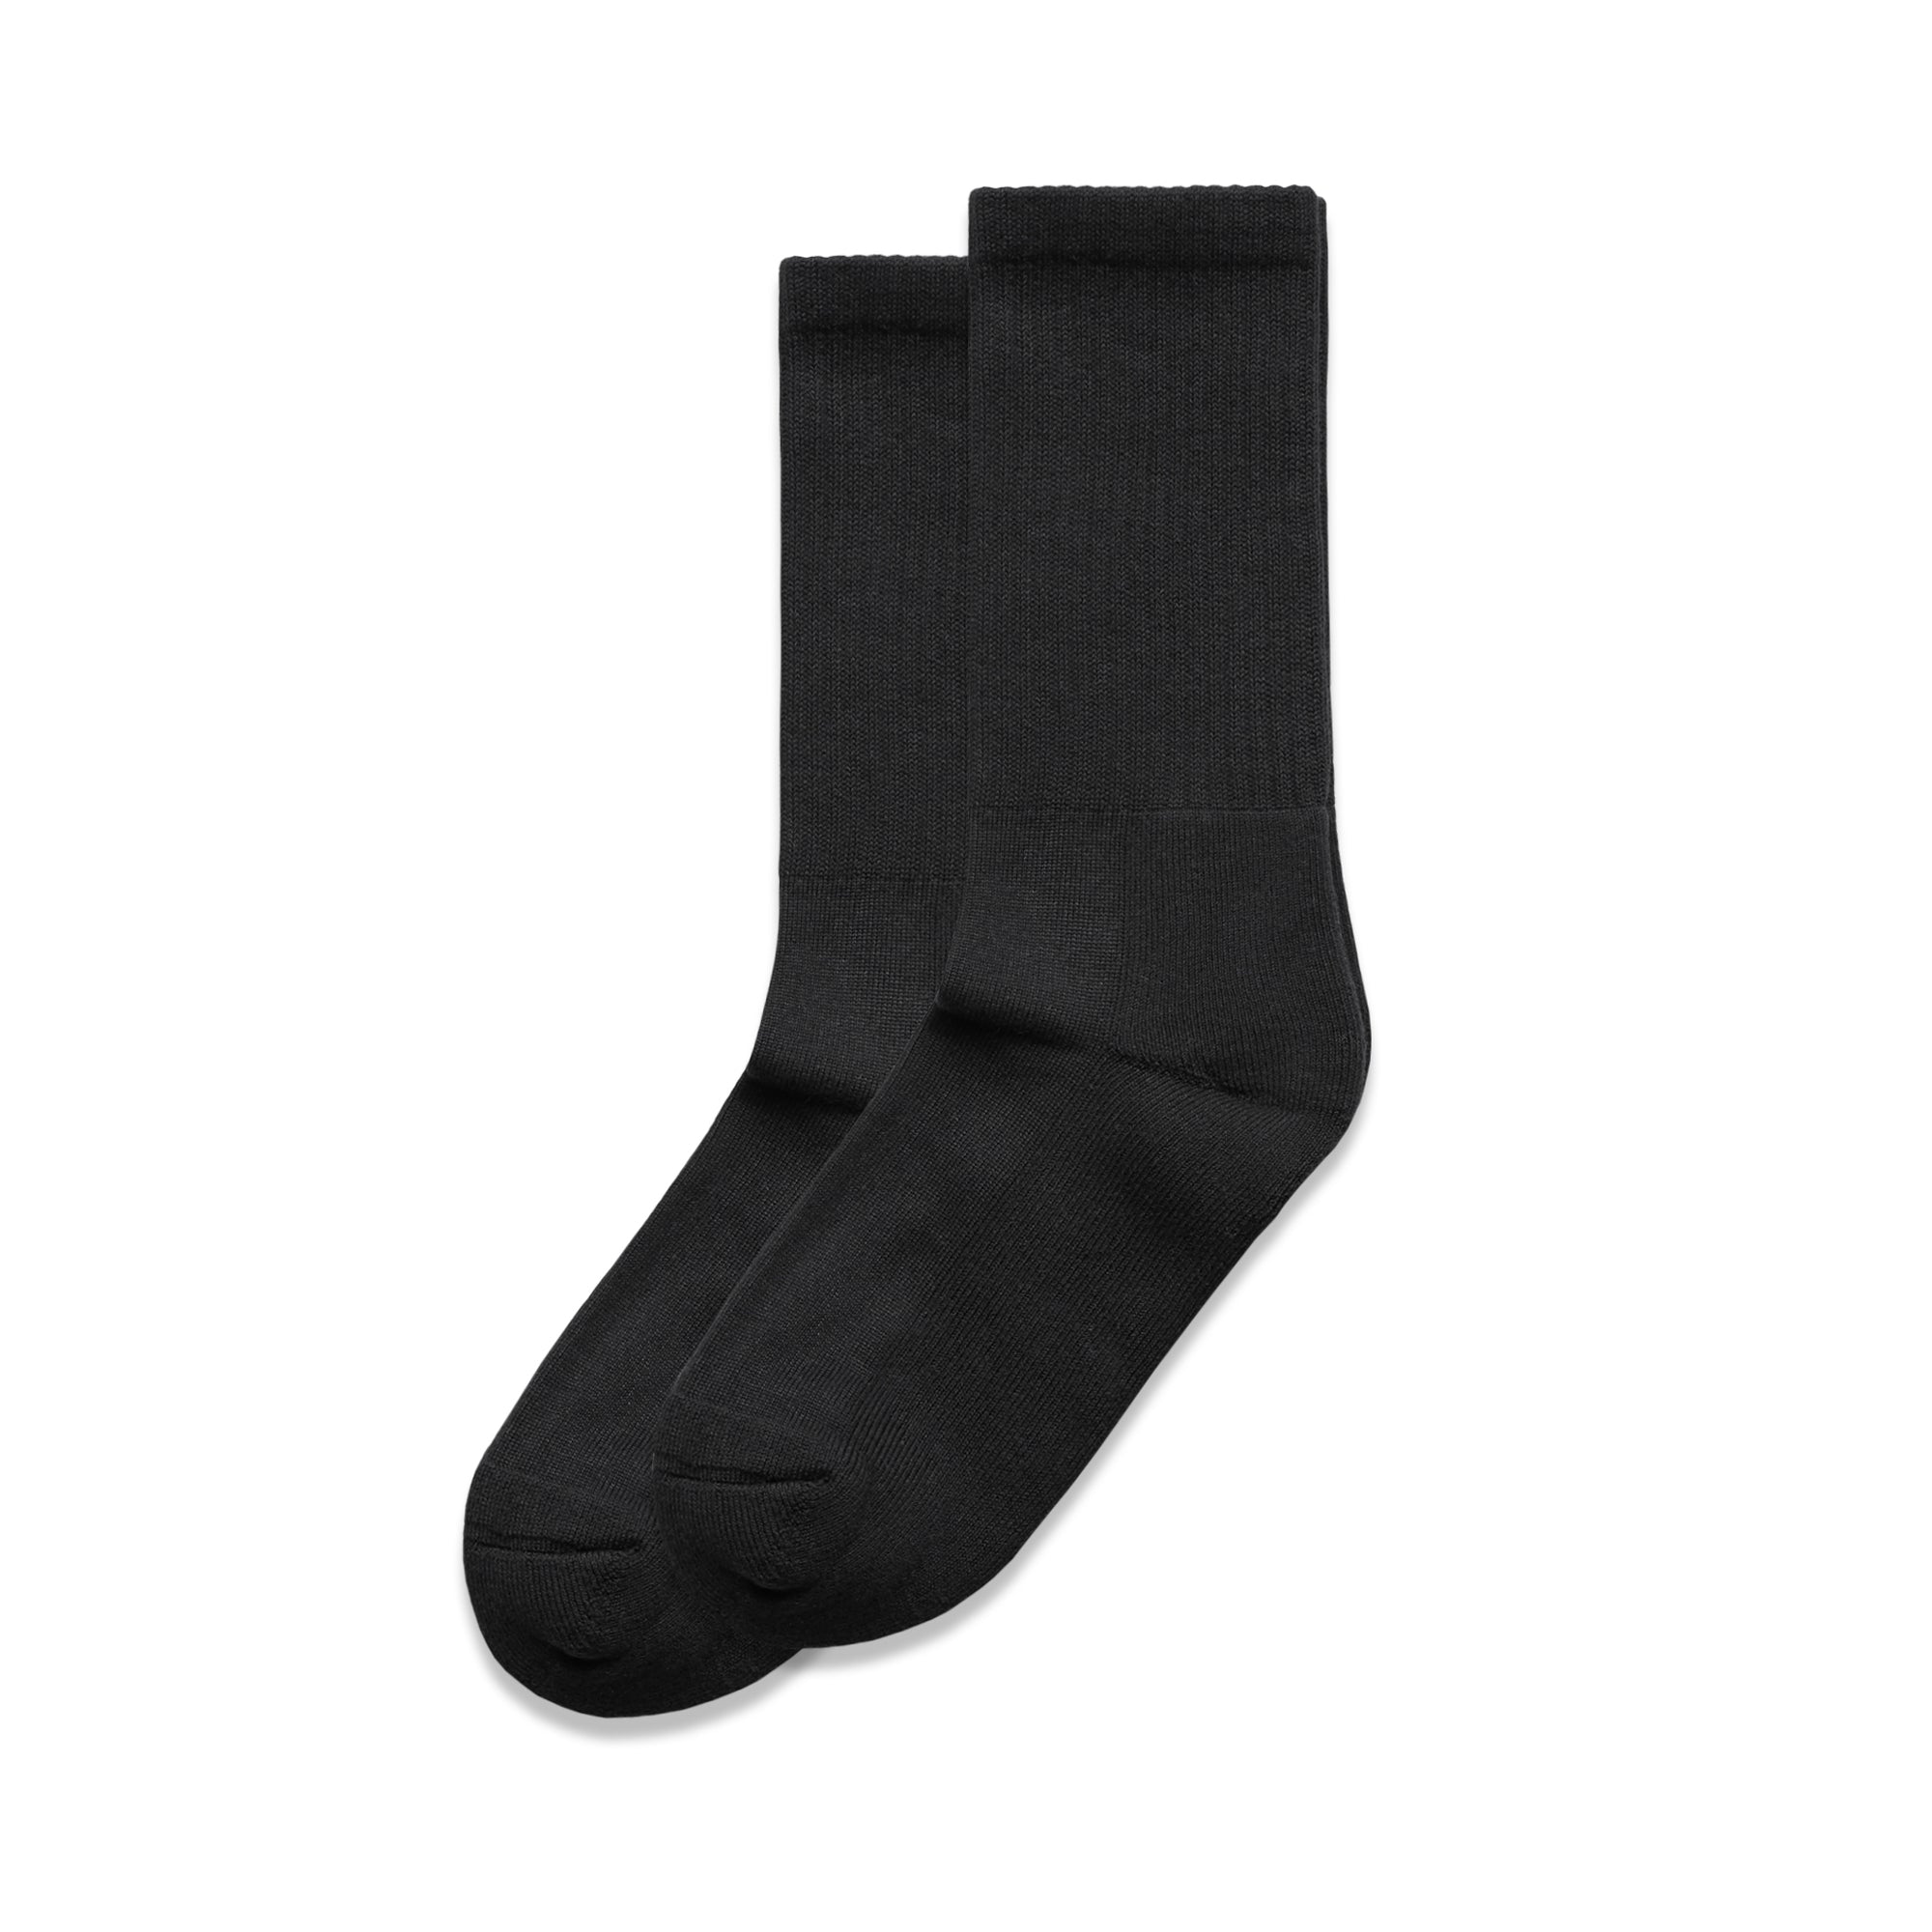 Quality Socks